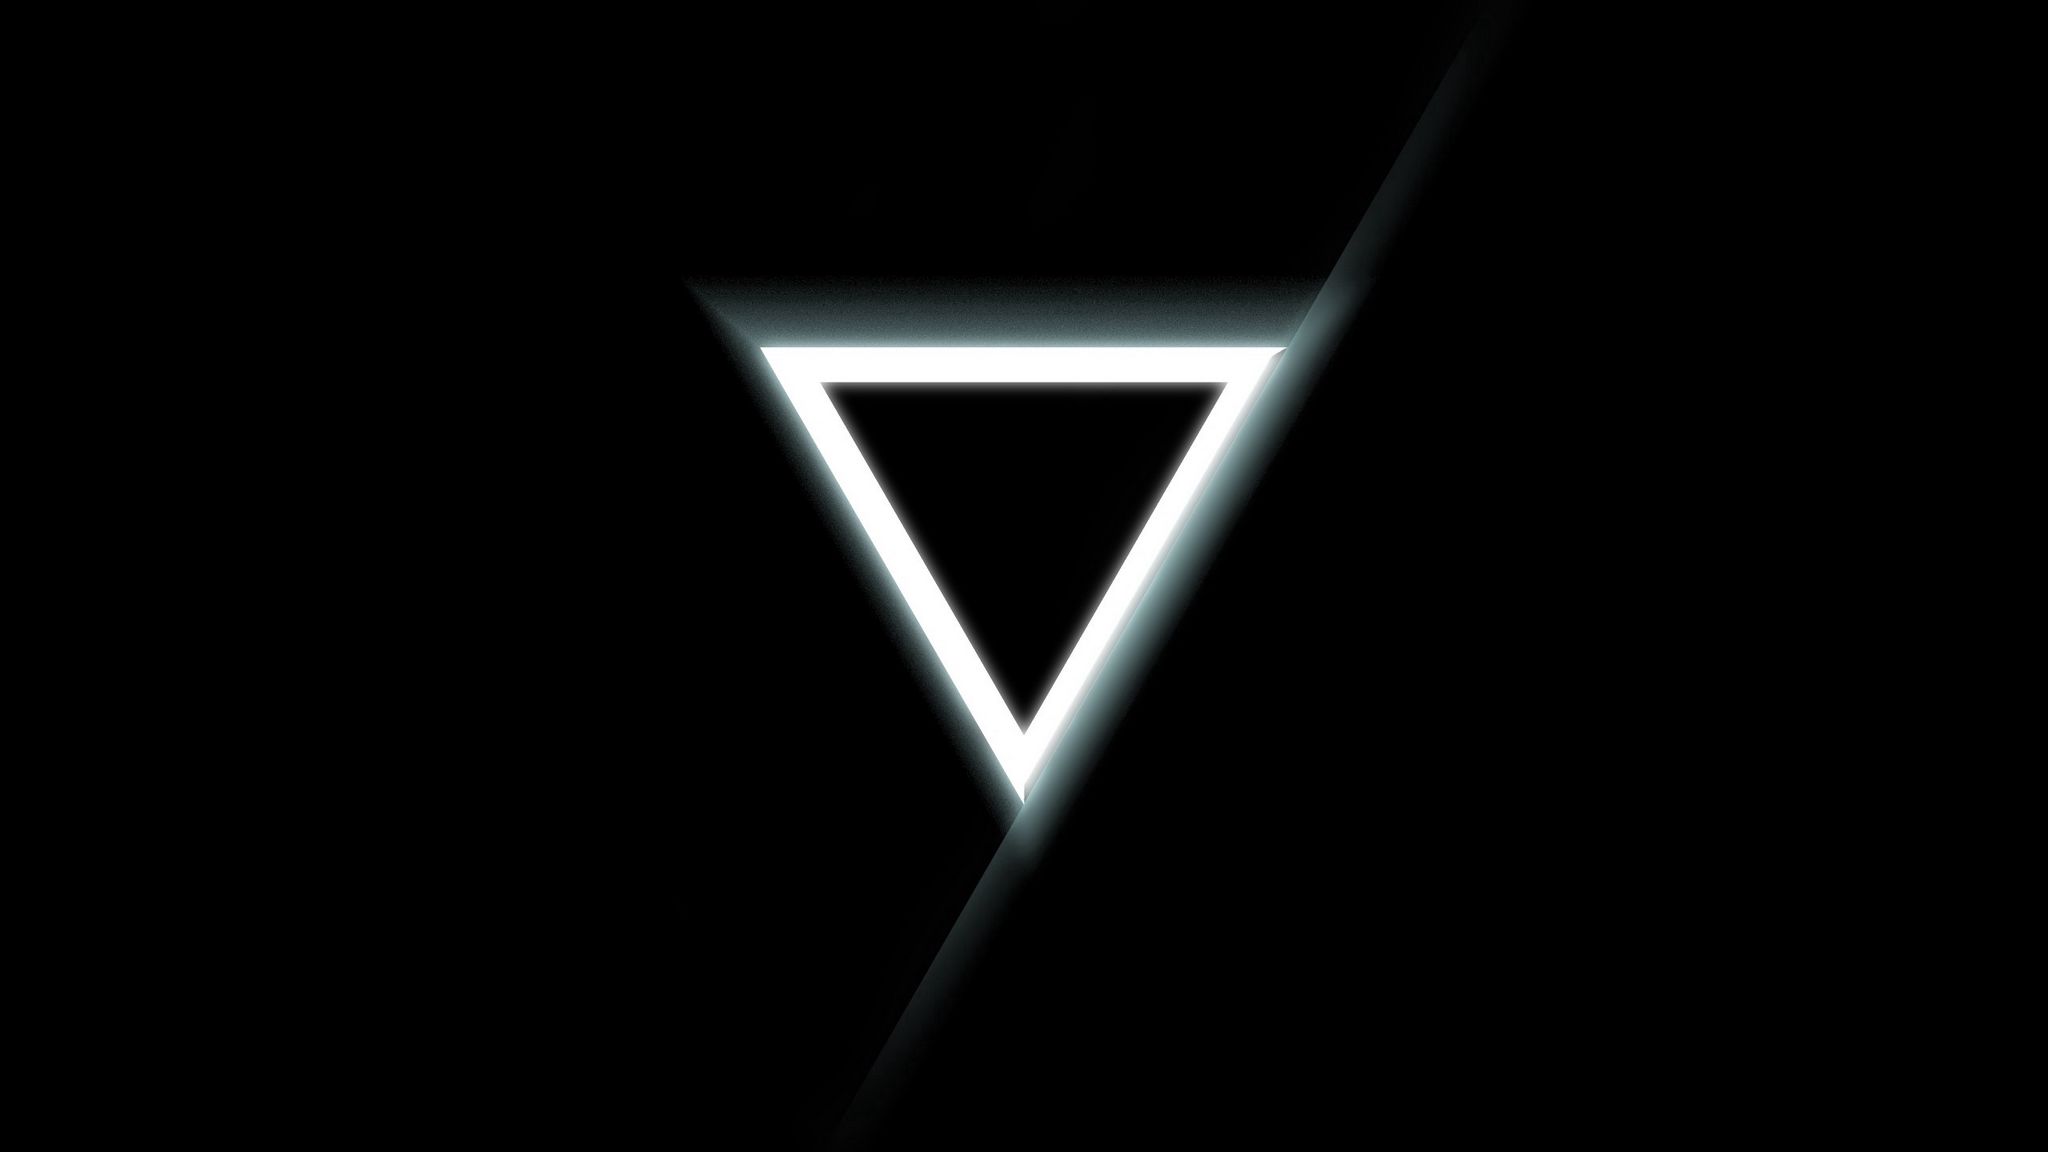 2048x1152 Wallpaper triangle, inverted, black, white